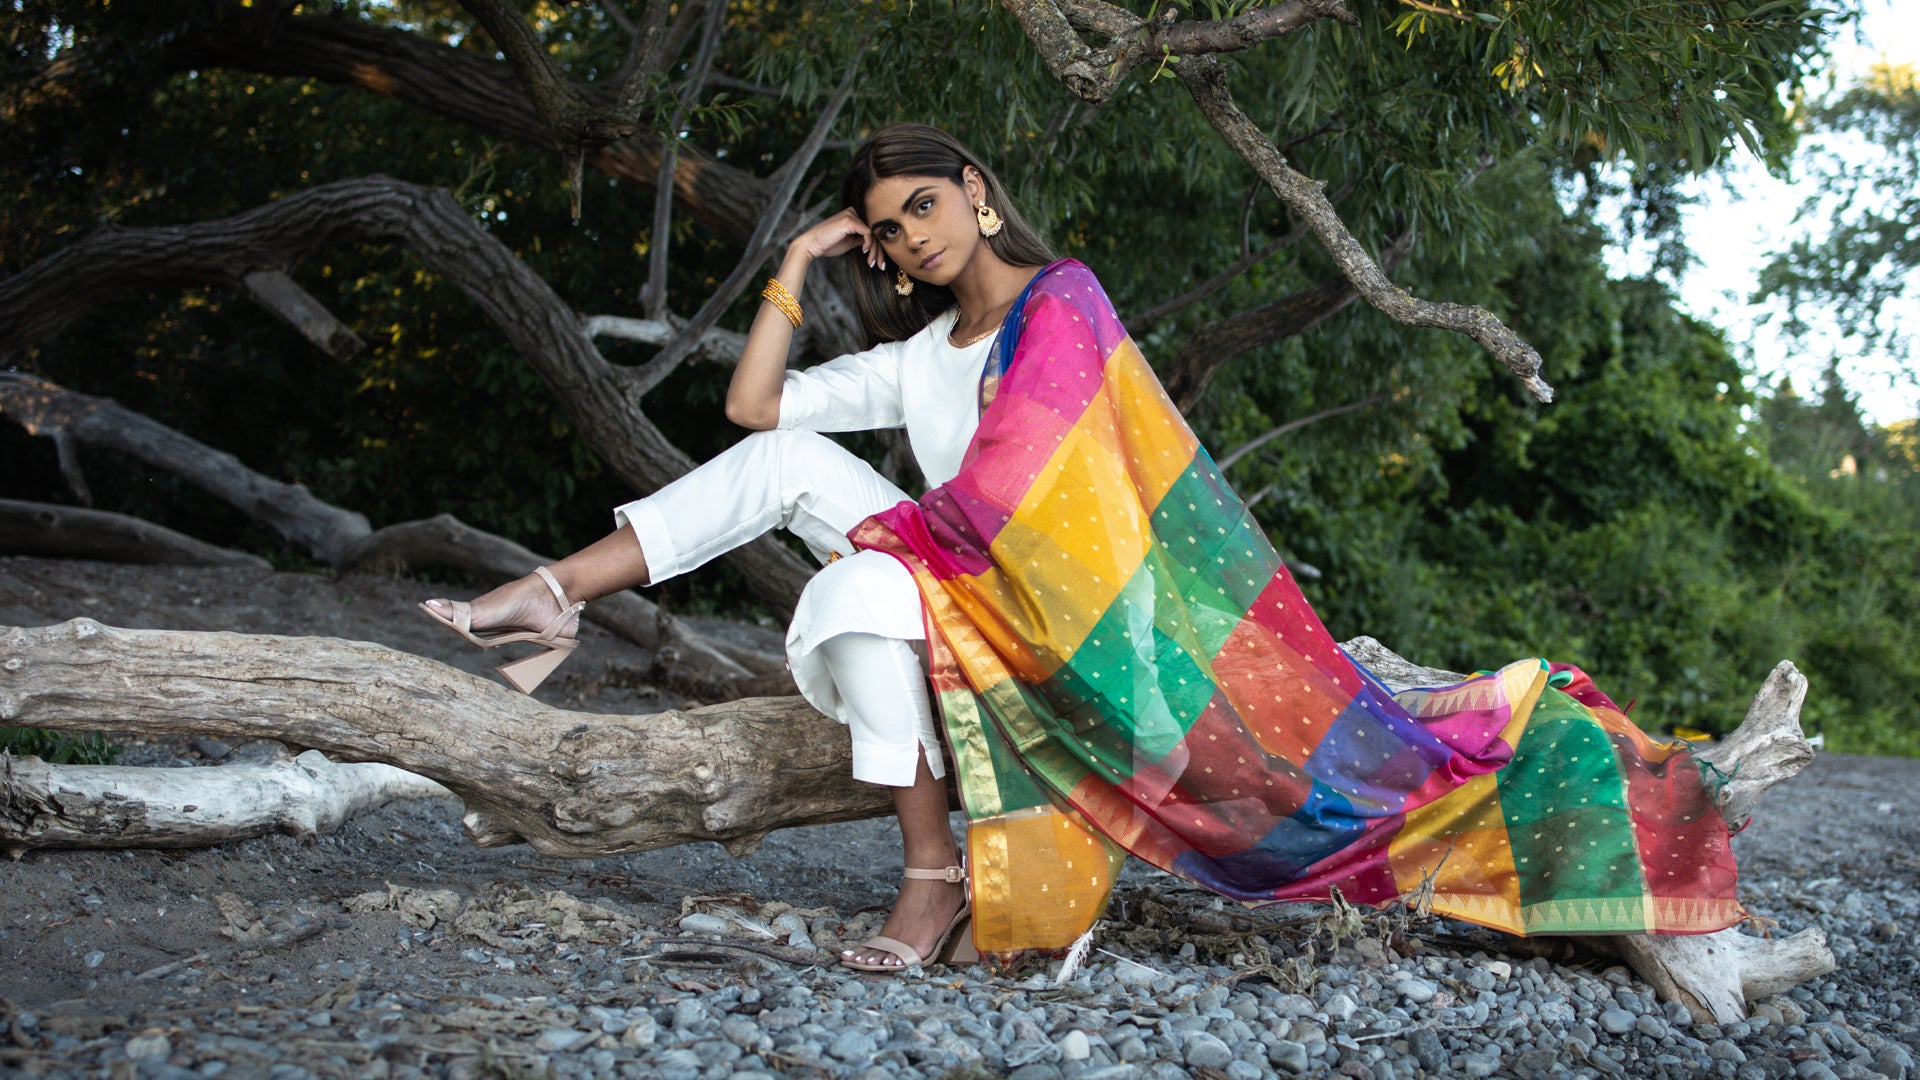 Top 20 salwar suit photo pose ideas |stylish salwar suit photo pose for  girls |Photo poses for girls - YouTube